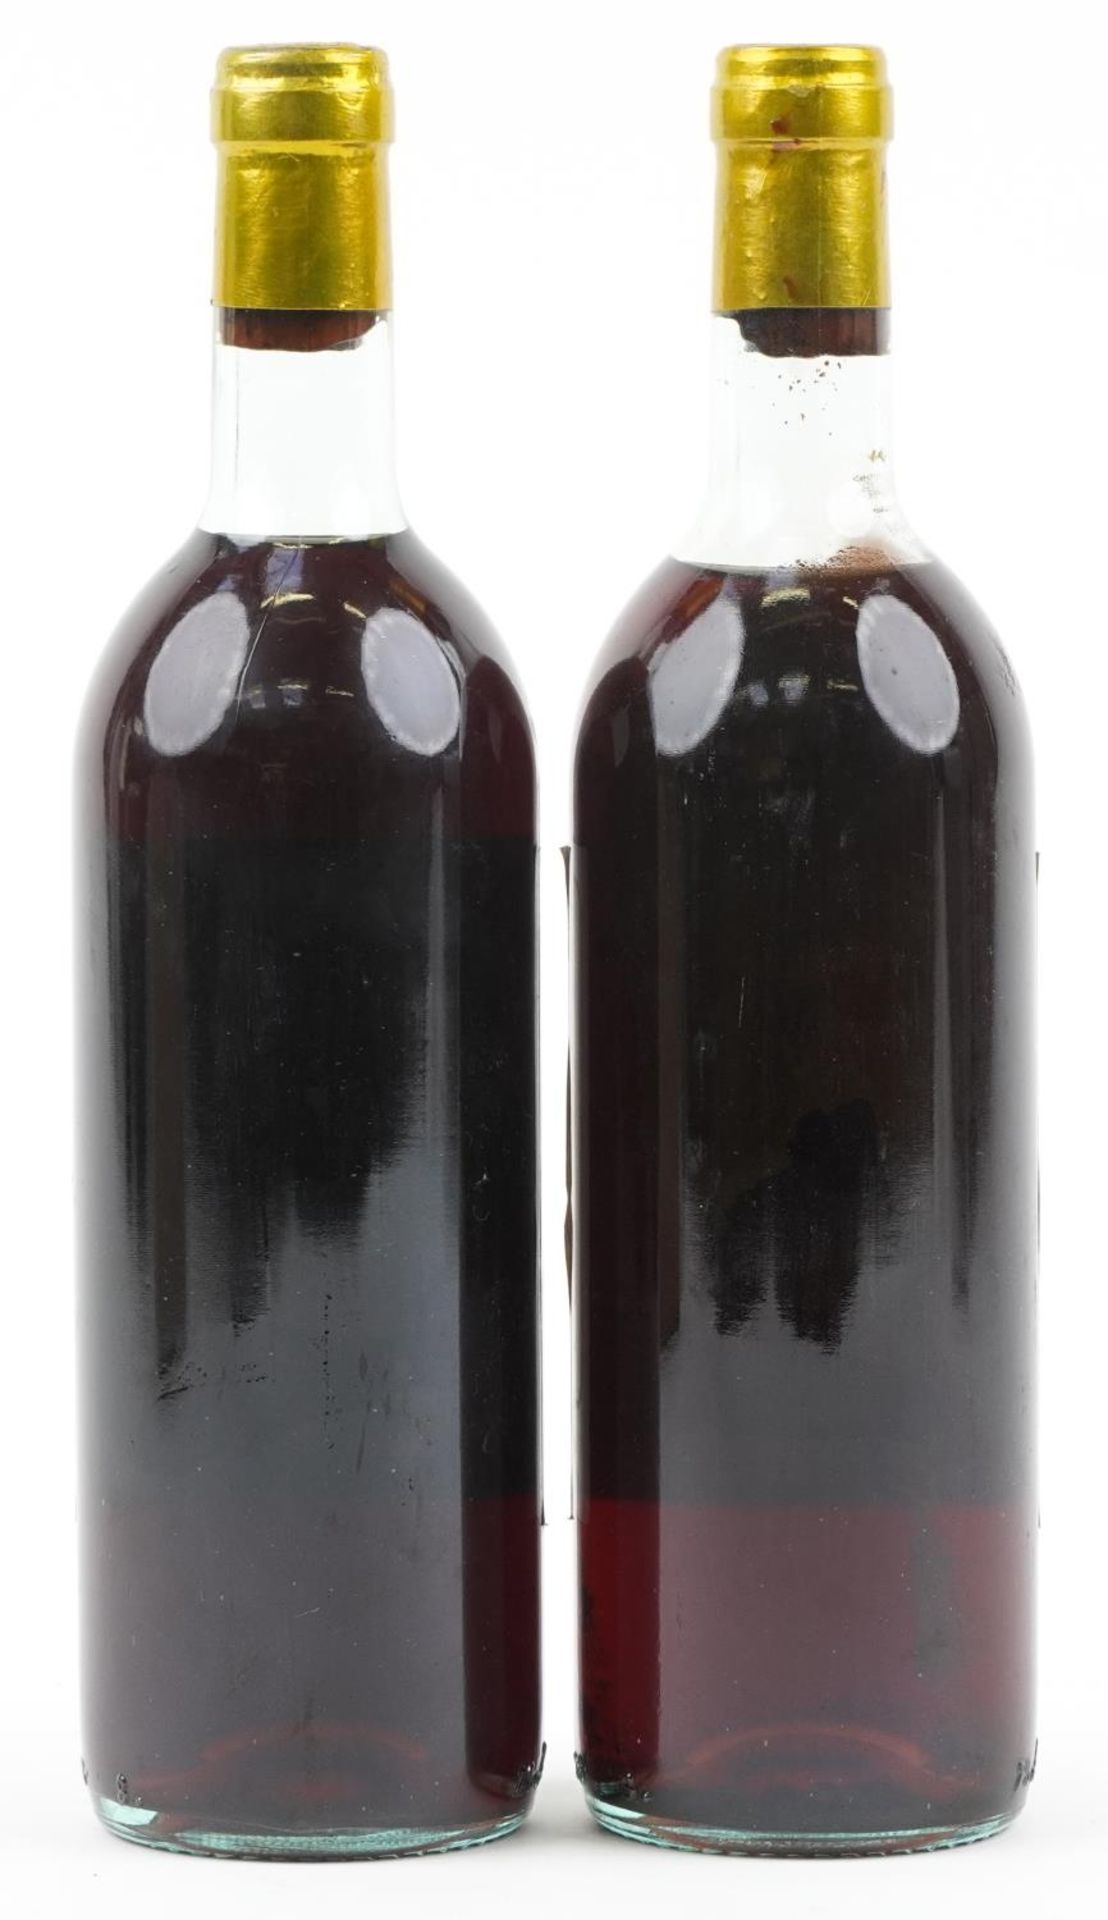 Two Bottles of 1976 Chateau Bastor Lamontagne Sauternes dessert wine - Image 2 of 3